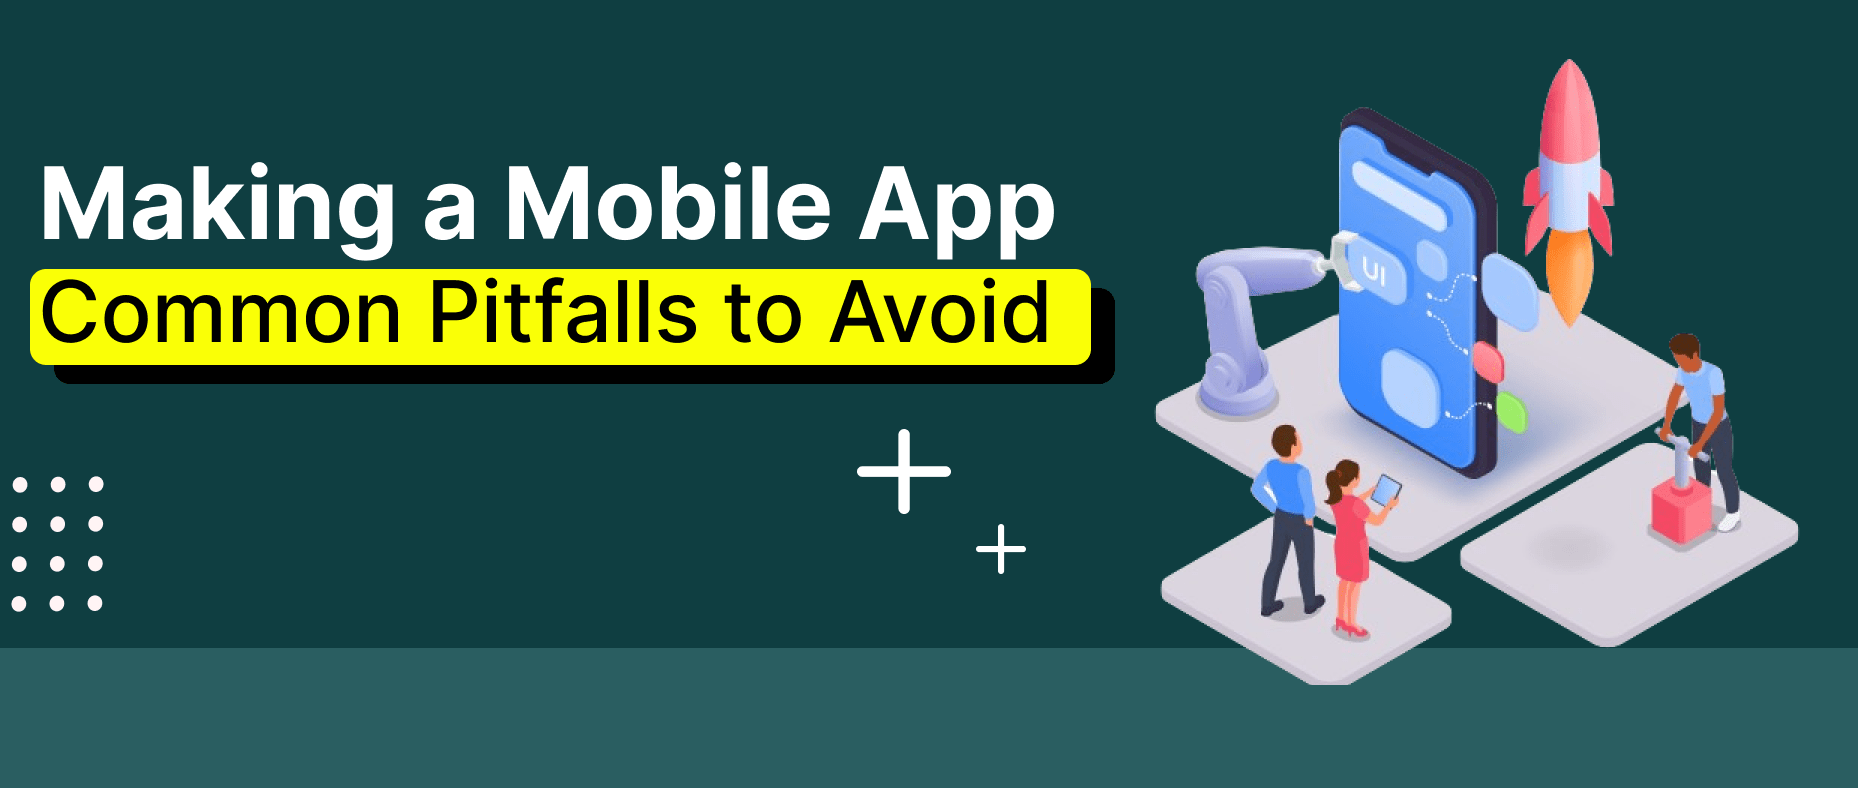 Making a Mobile App Common Pitfalls to Avoid Pyzen Technologies